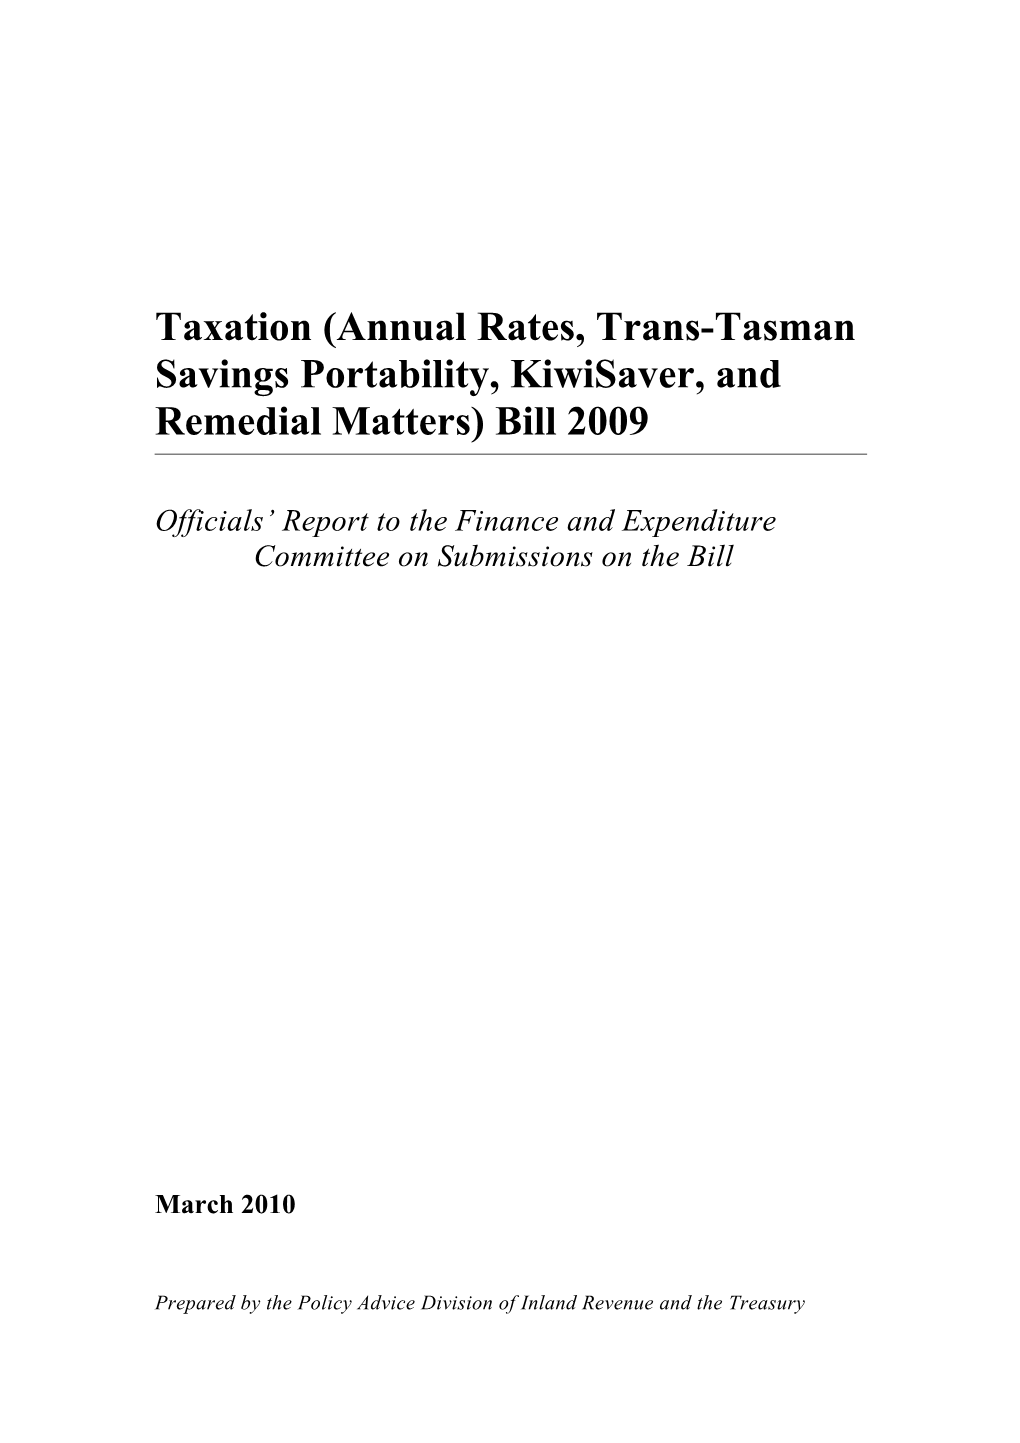 Taxation (Annual Rates, Trans-Tasman Savings Portability, Kiwisaver, and Remedial Matters)